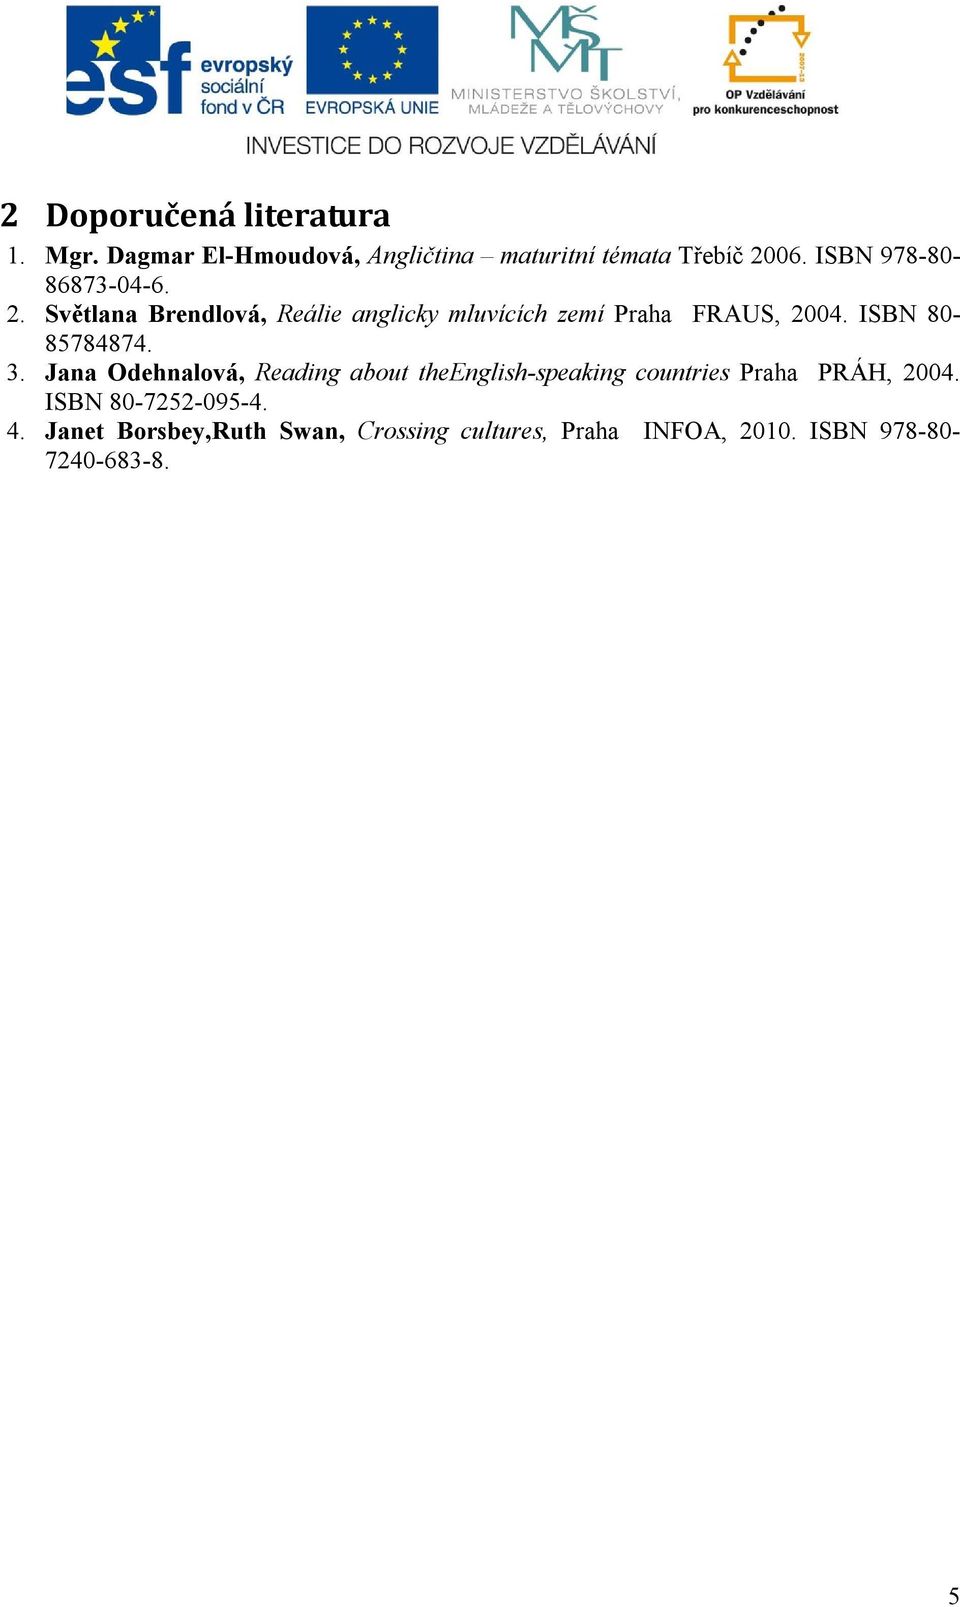 ISBN 80-85784874. 3. Jana Odehnalová, Reading about theenglish-speaking countries Praha PRÁH, 2004.